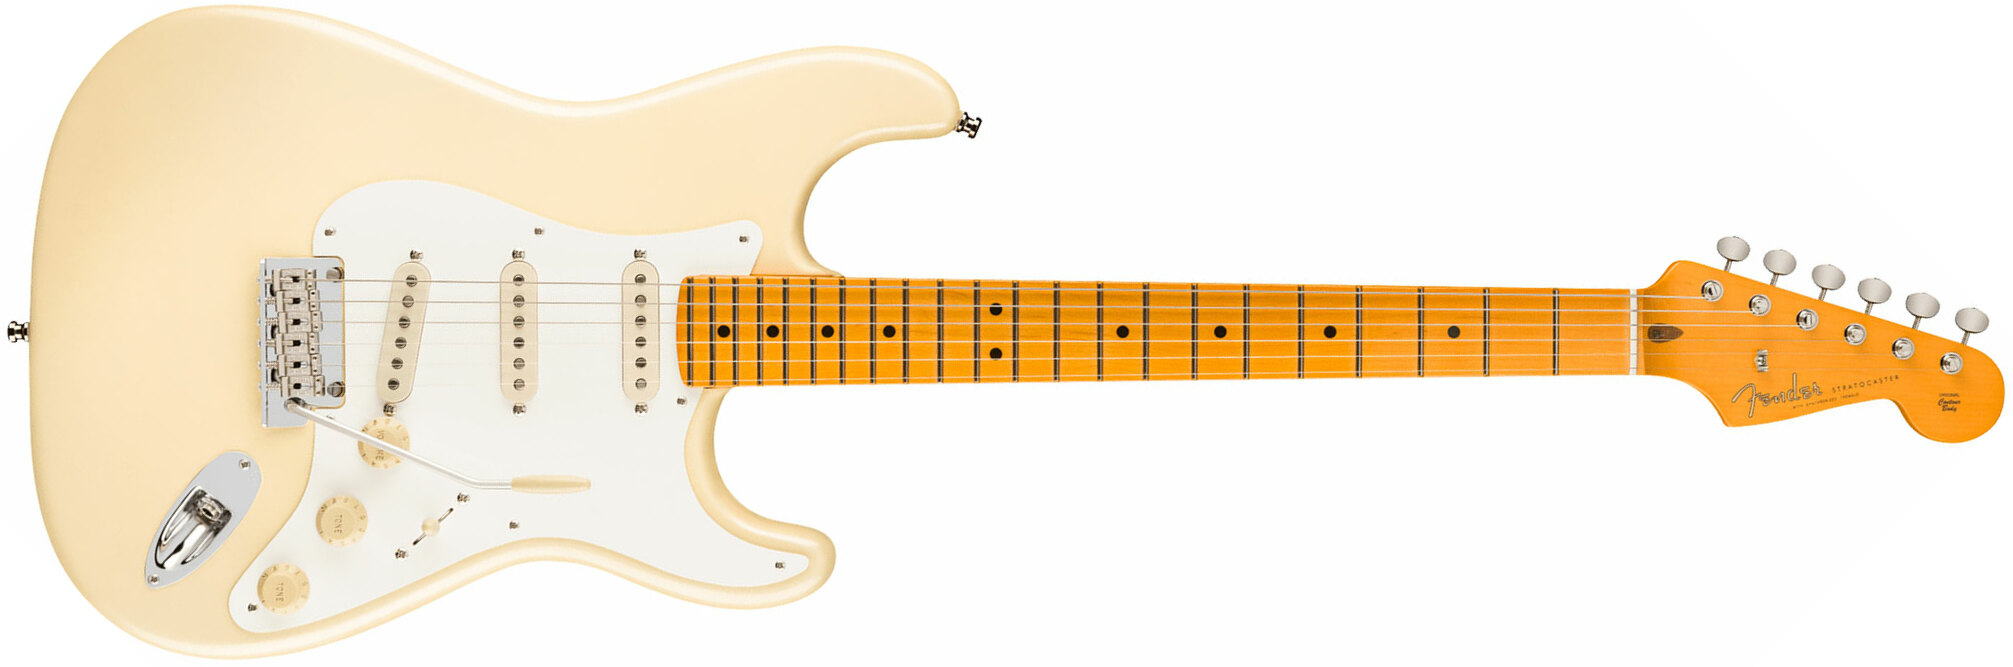 Fender Lincoln Brewster Strat Usa Signature 3s Dimarzio Trem Mn - Olympic Pearl - Guitarra electrica retro rock - Main picture